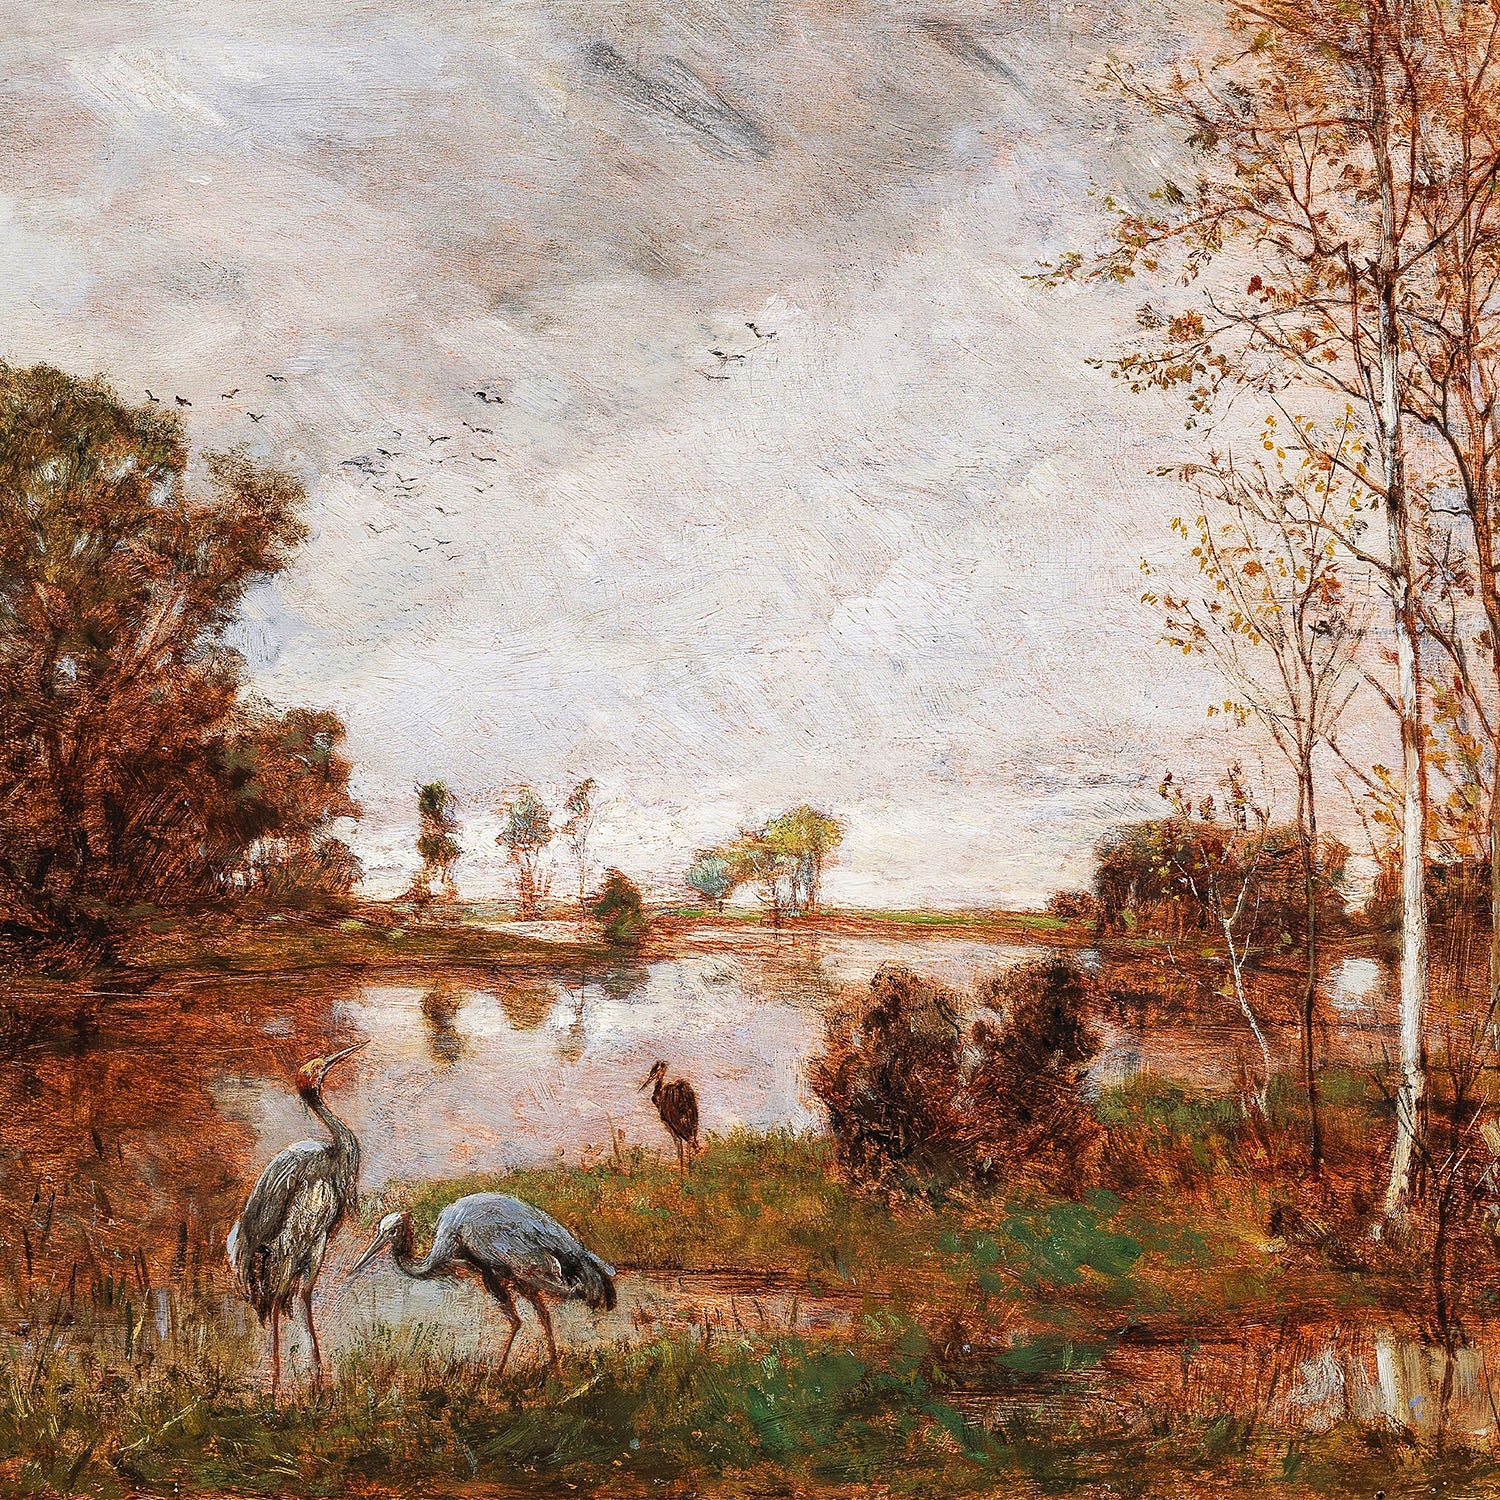 herons on the riverbank